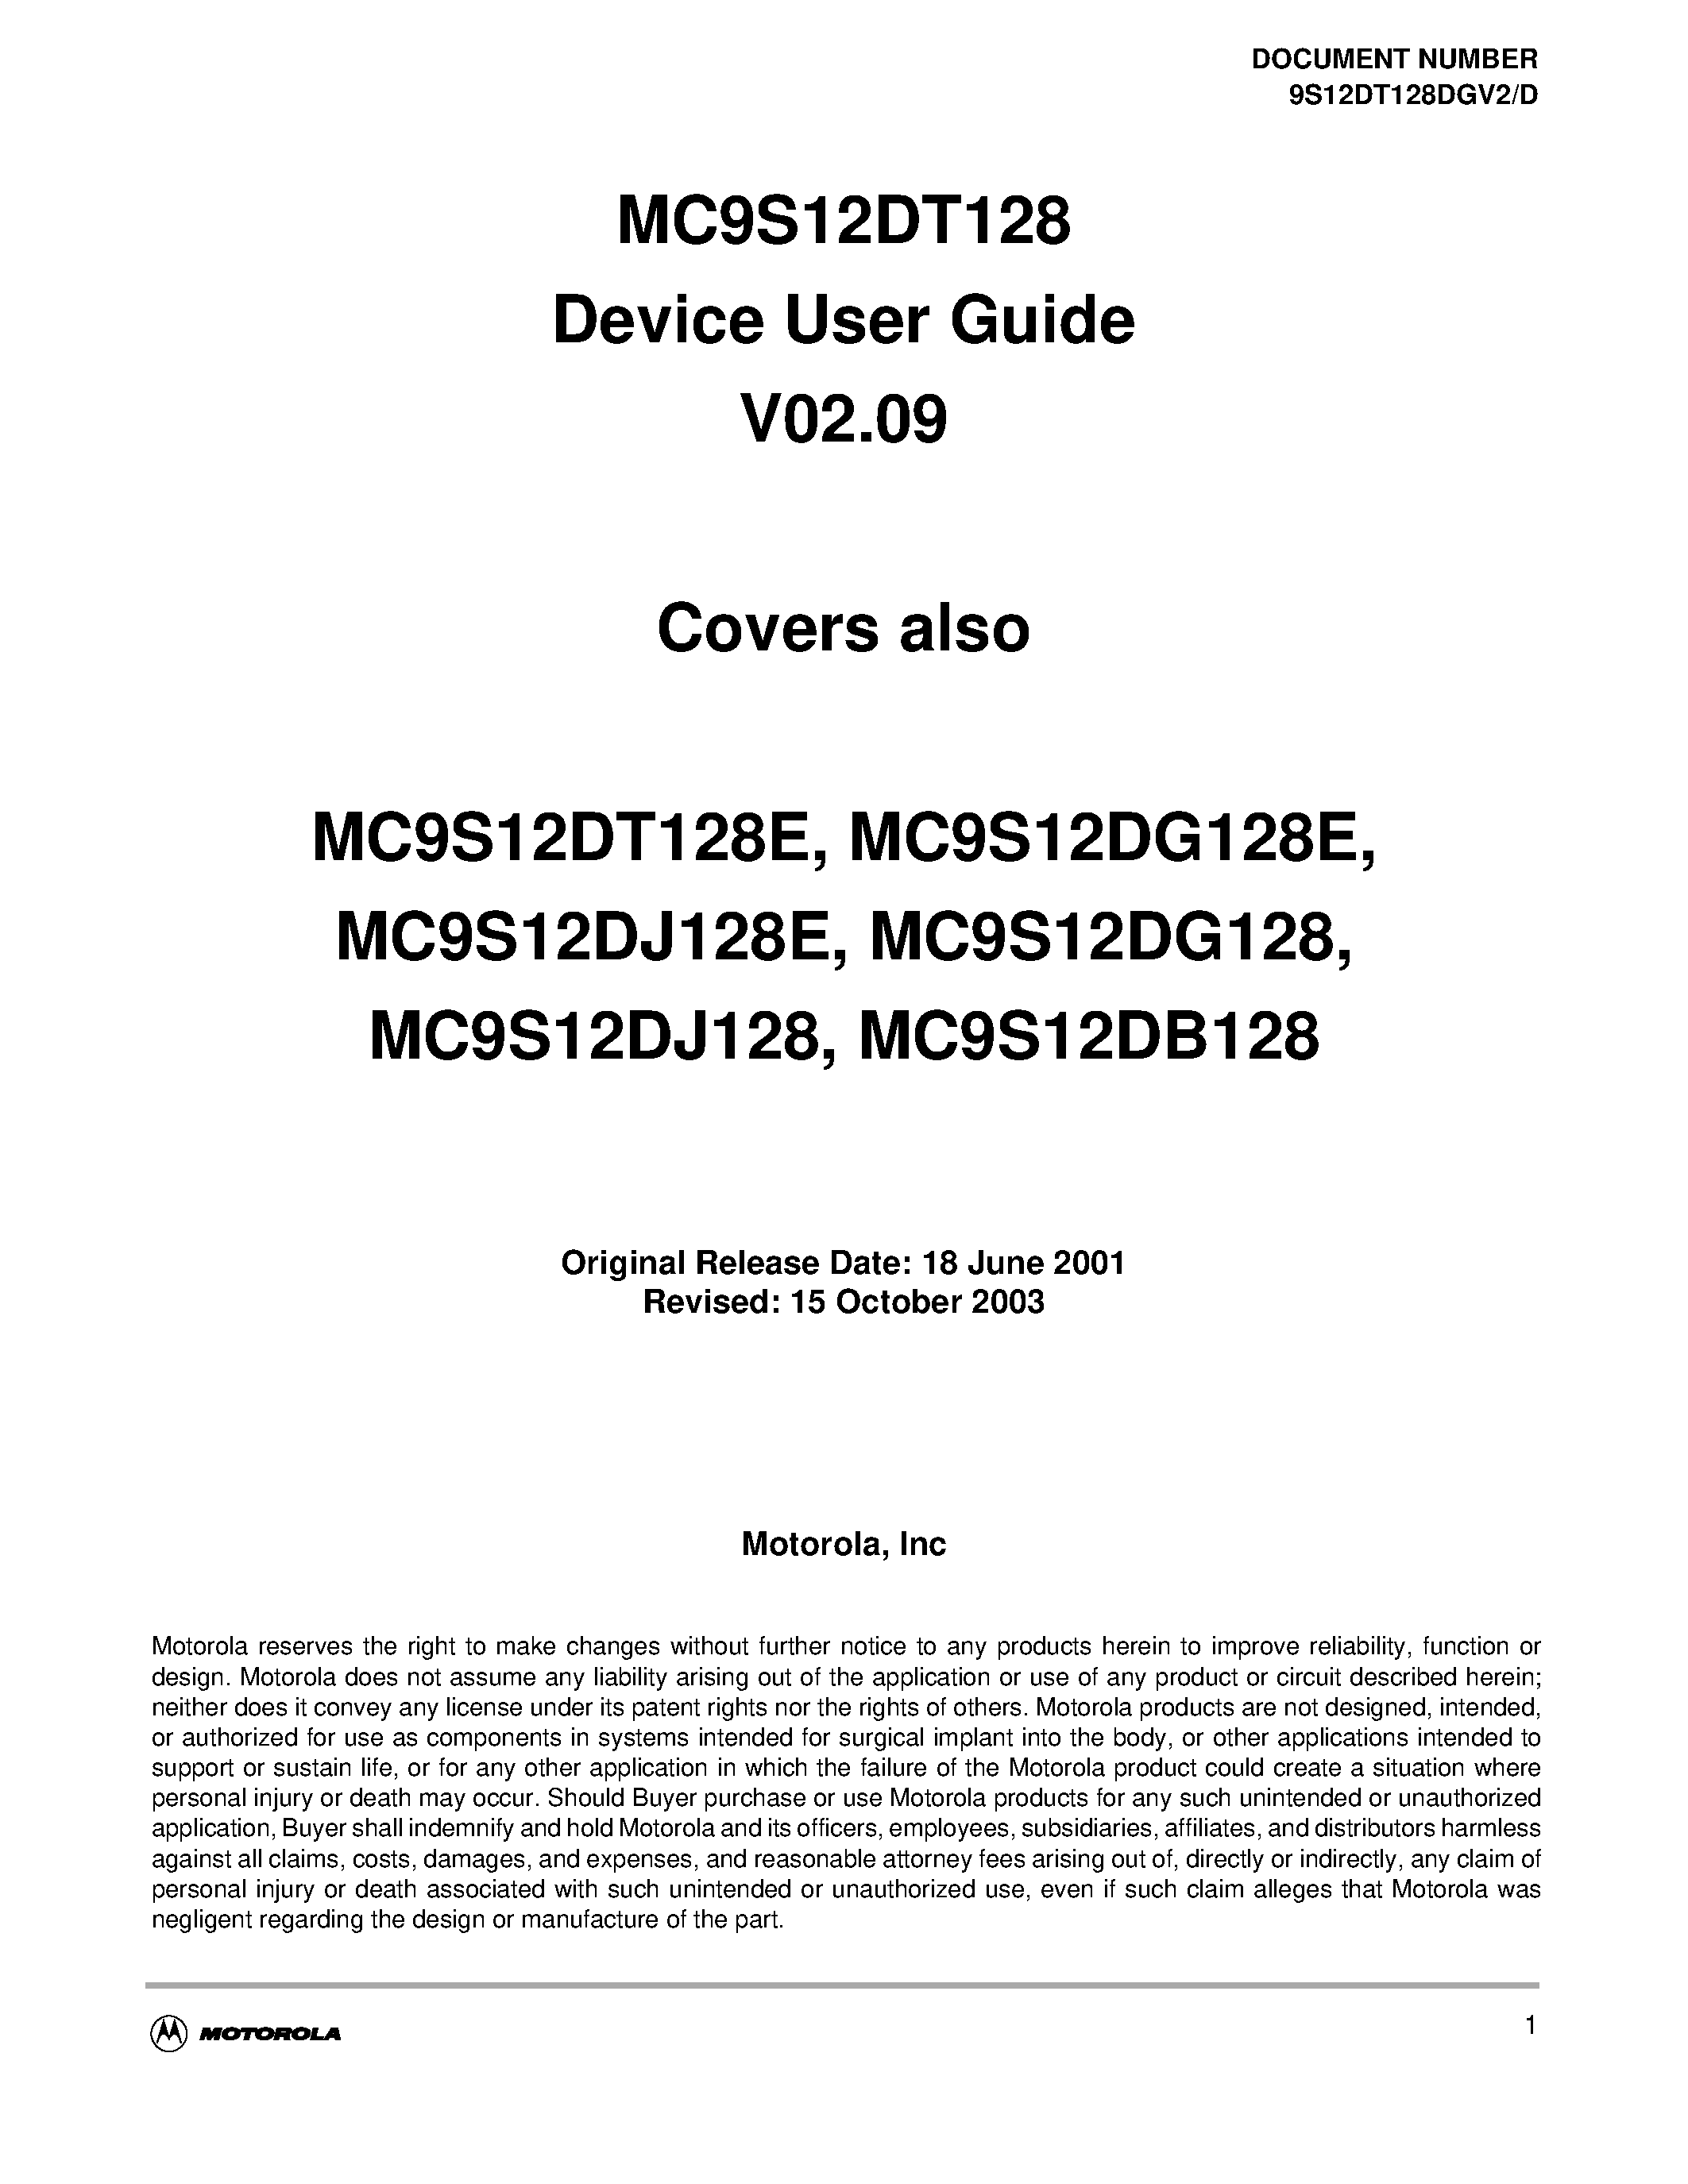 Даташит S12DTB128PIMV2D - MC9S12DT128 Device User Guide V02.09 страница 1